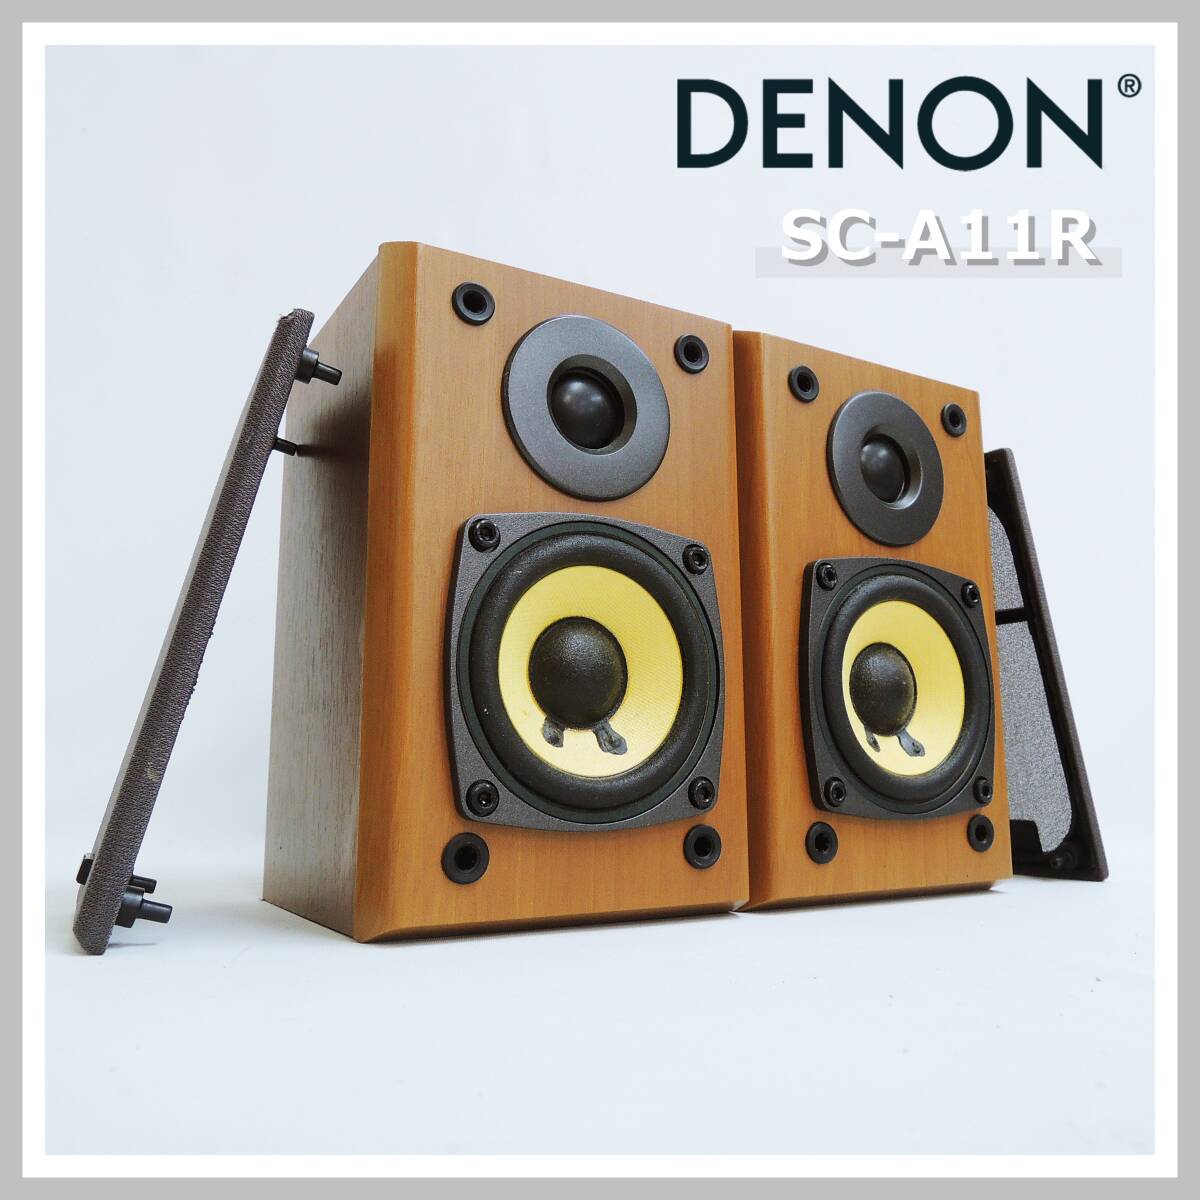 [1 старт ] Denon SC-A11R пара динамик маленький размер DENONten on новый товар справочная цена \\8,800 (2)